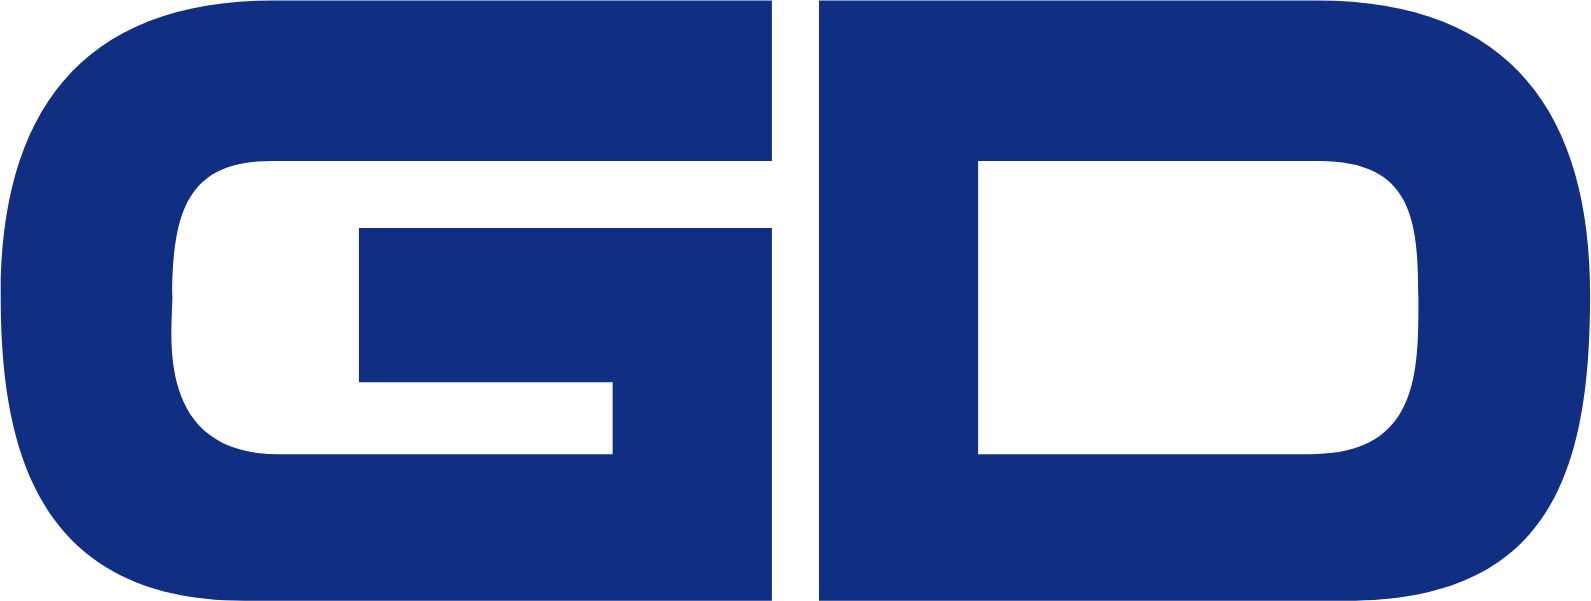 General Dynamics logo (PNG transparent)